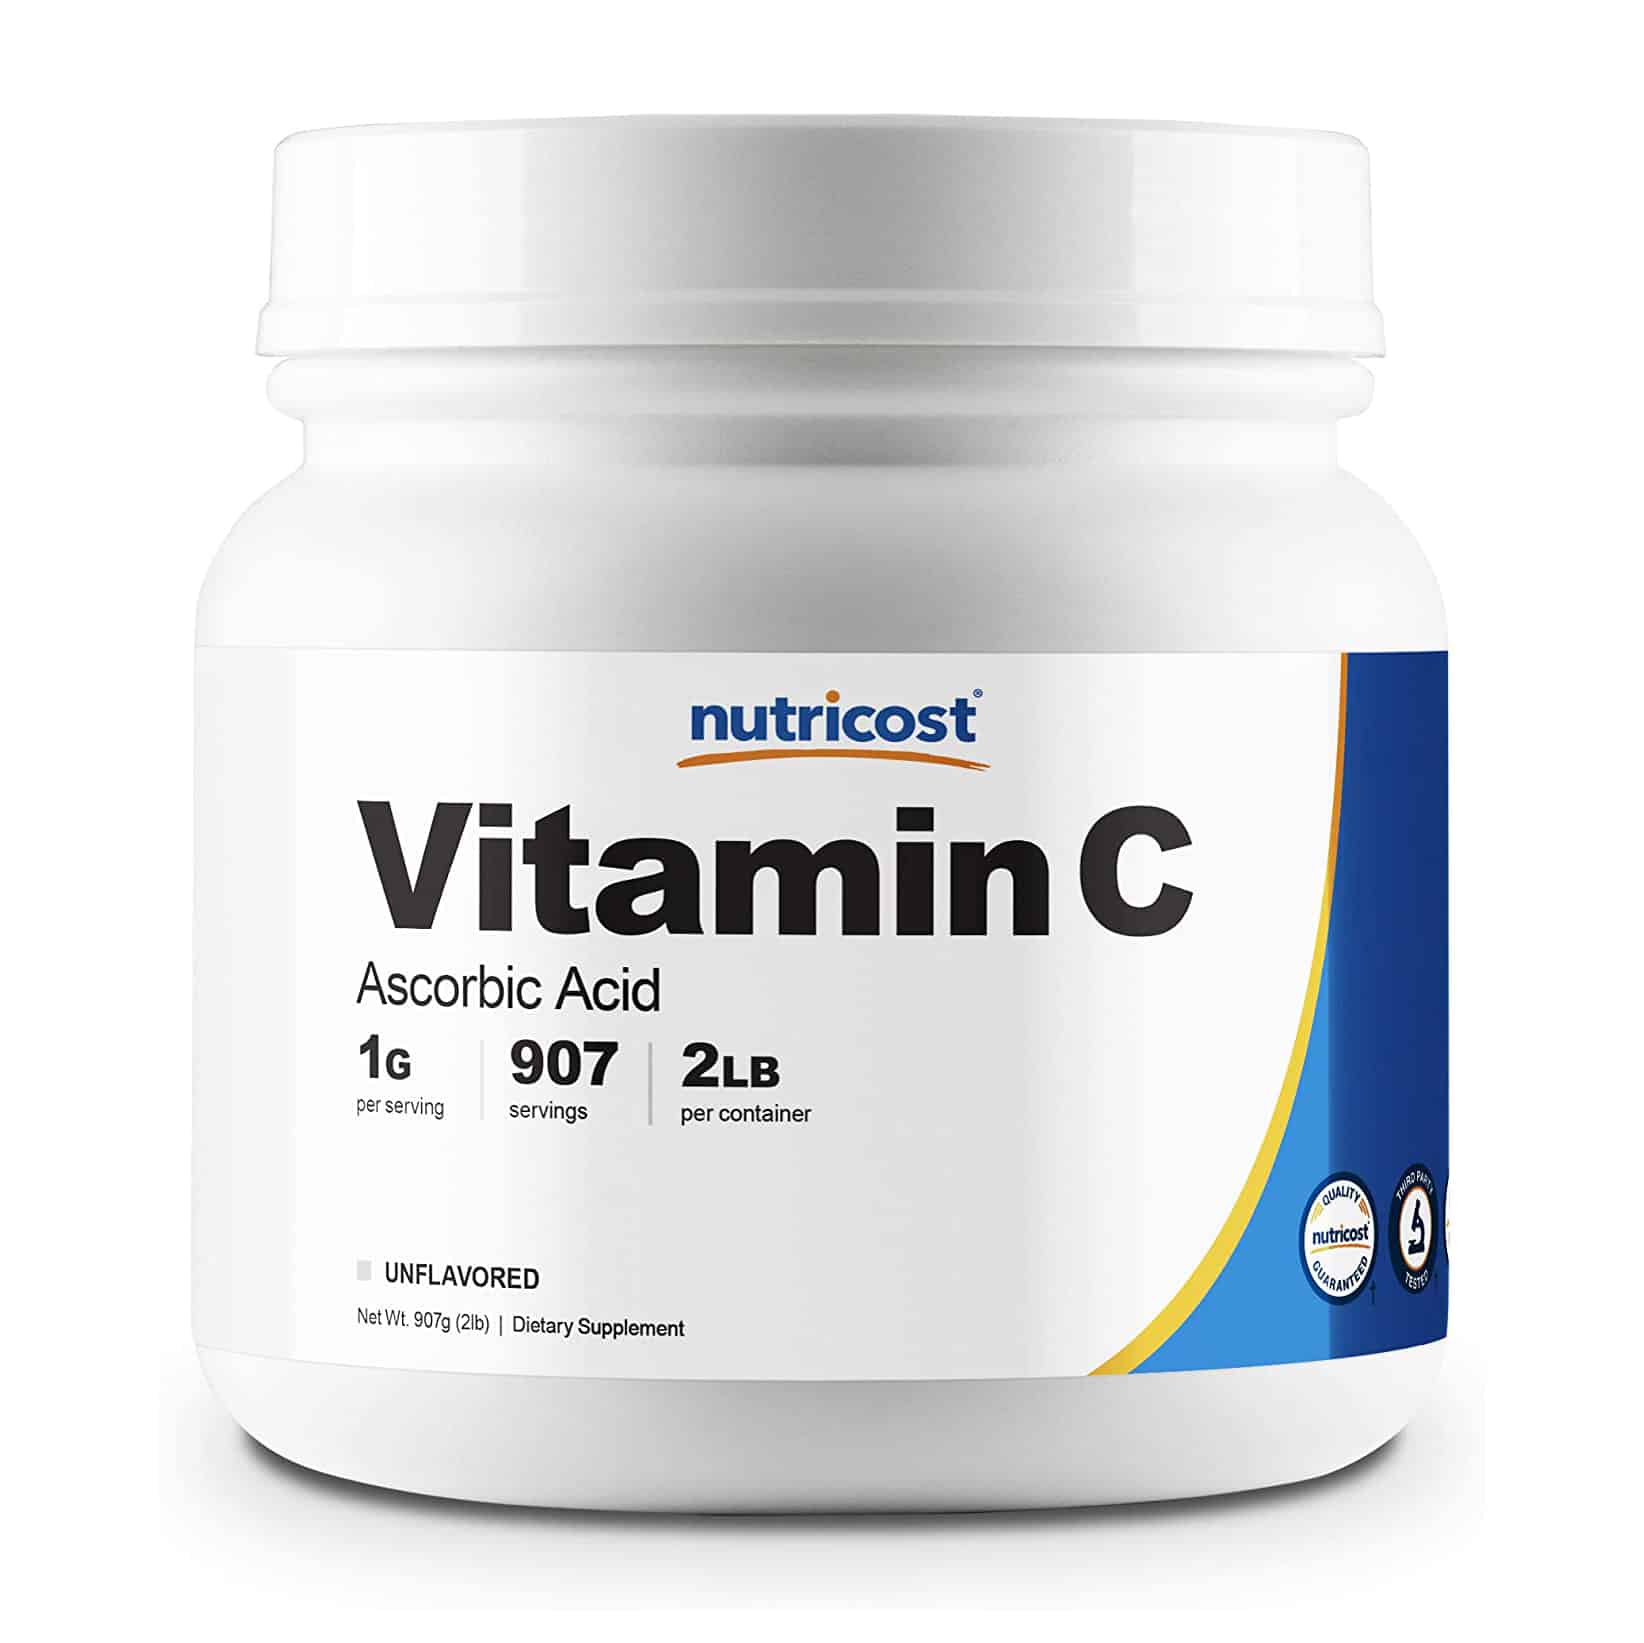 Vitamin powder. Витамин Pure Vitamin c. Powder. Витамин с в порошке. Nutricost Vitamin c Powder Ascorbic acid. Azinc Boost витамины.